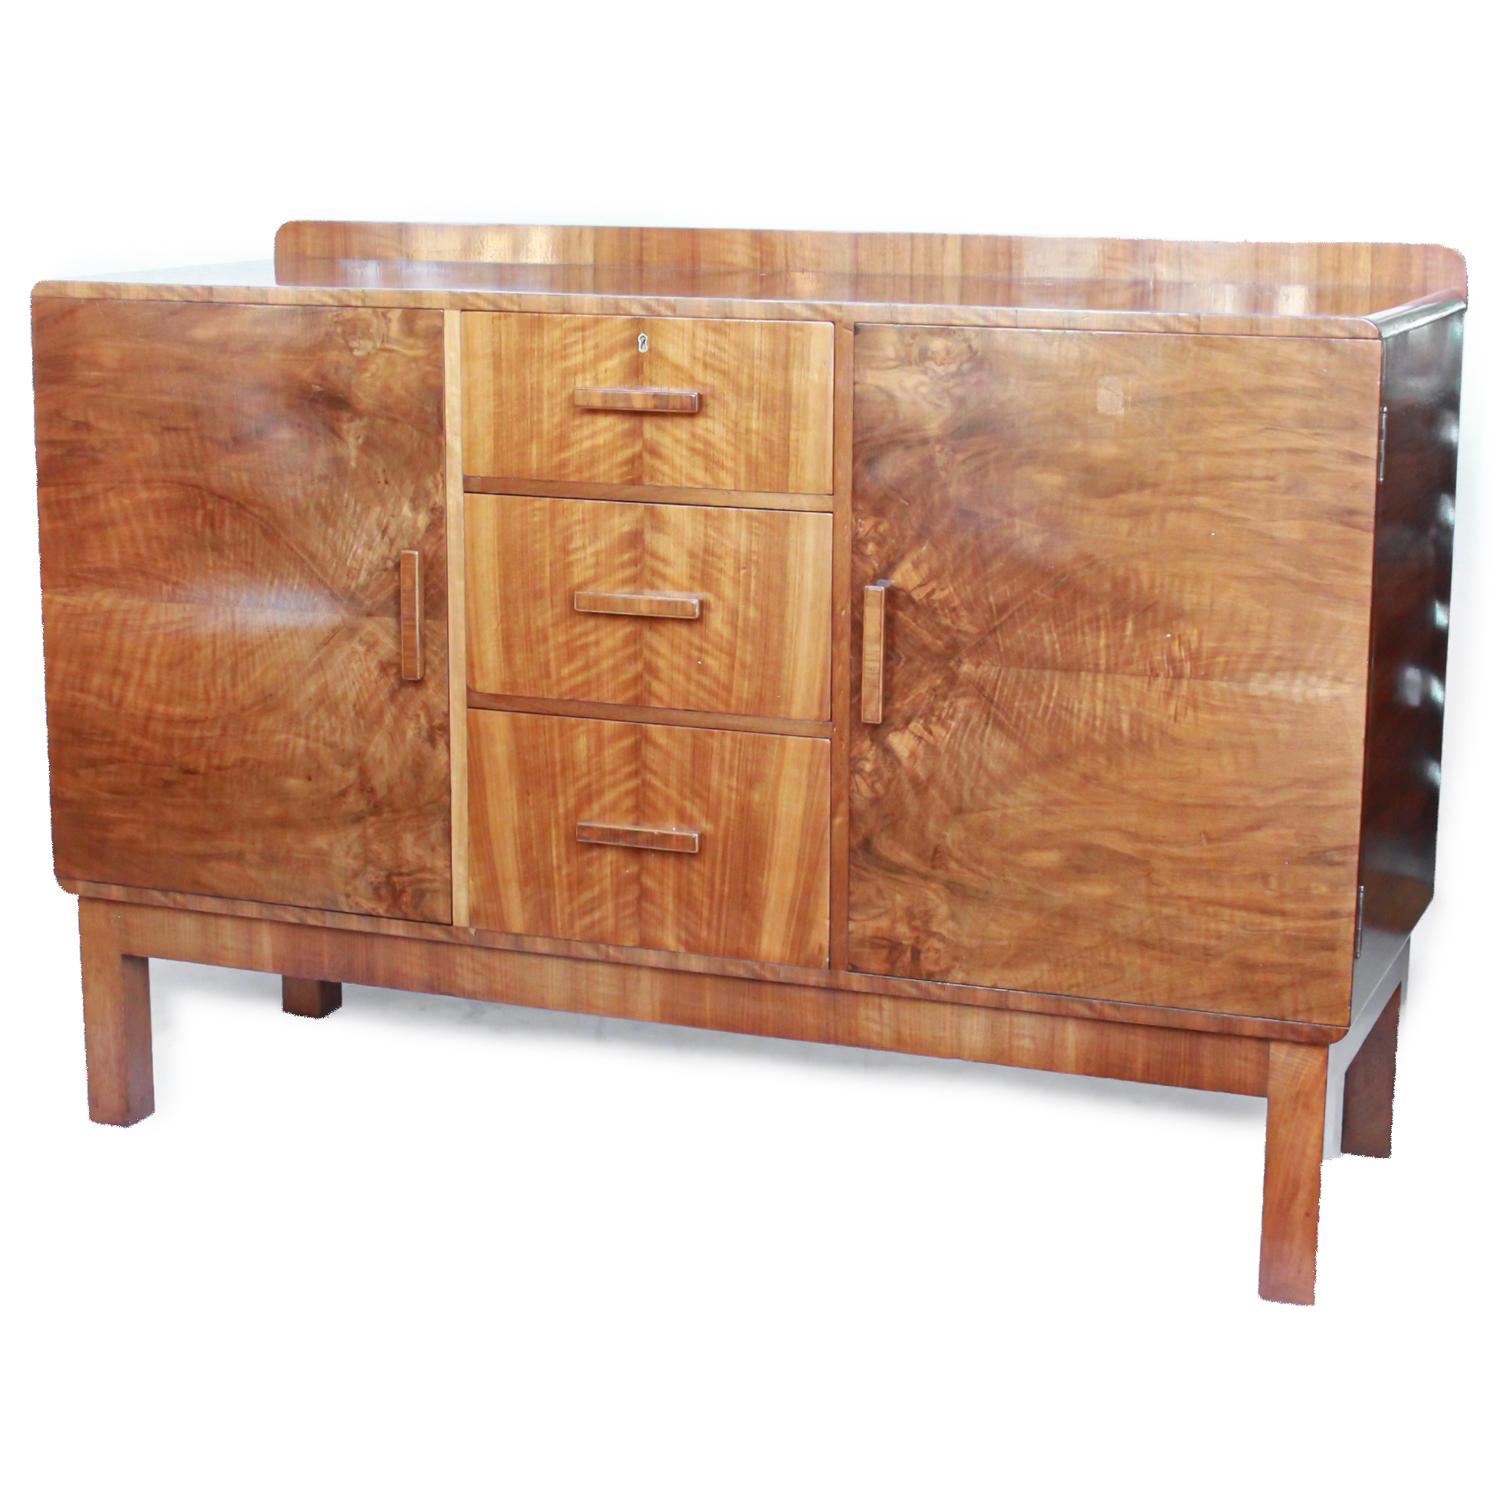 An Art Deco sideboard, with integral shelves and drawers. Original wooden handles. Burr and straight grain walnut veneer.

Dimensions: H 95cm, W 138cm, D 51.5cm 

Origin: English

Date: circa 1930

Item No: 2410191.